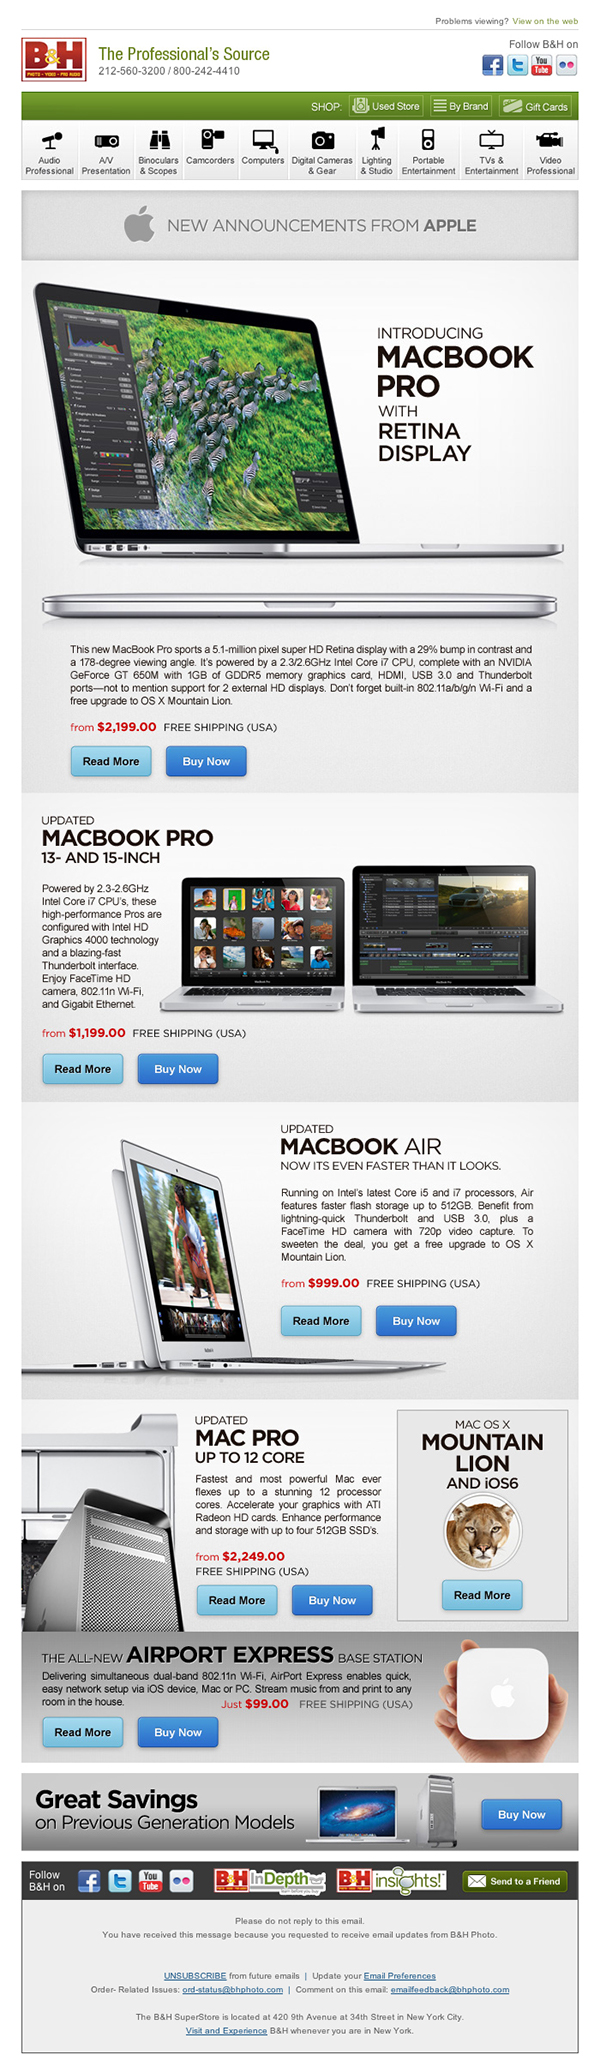 Apple Macbook Pro Retina Display email marketing Web UI Design announcement